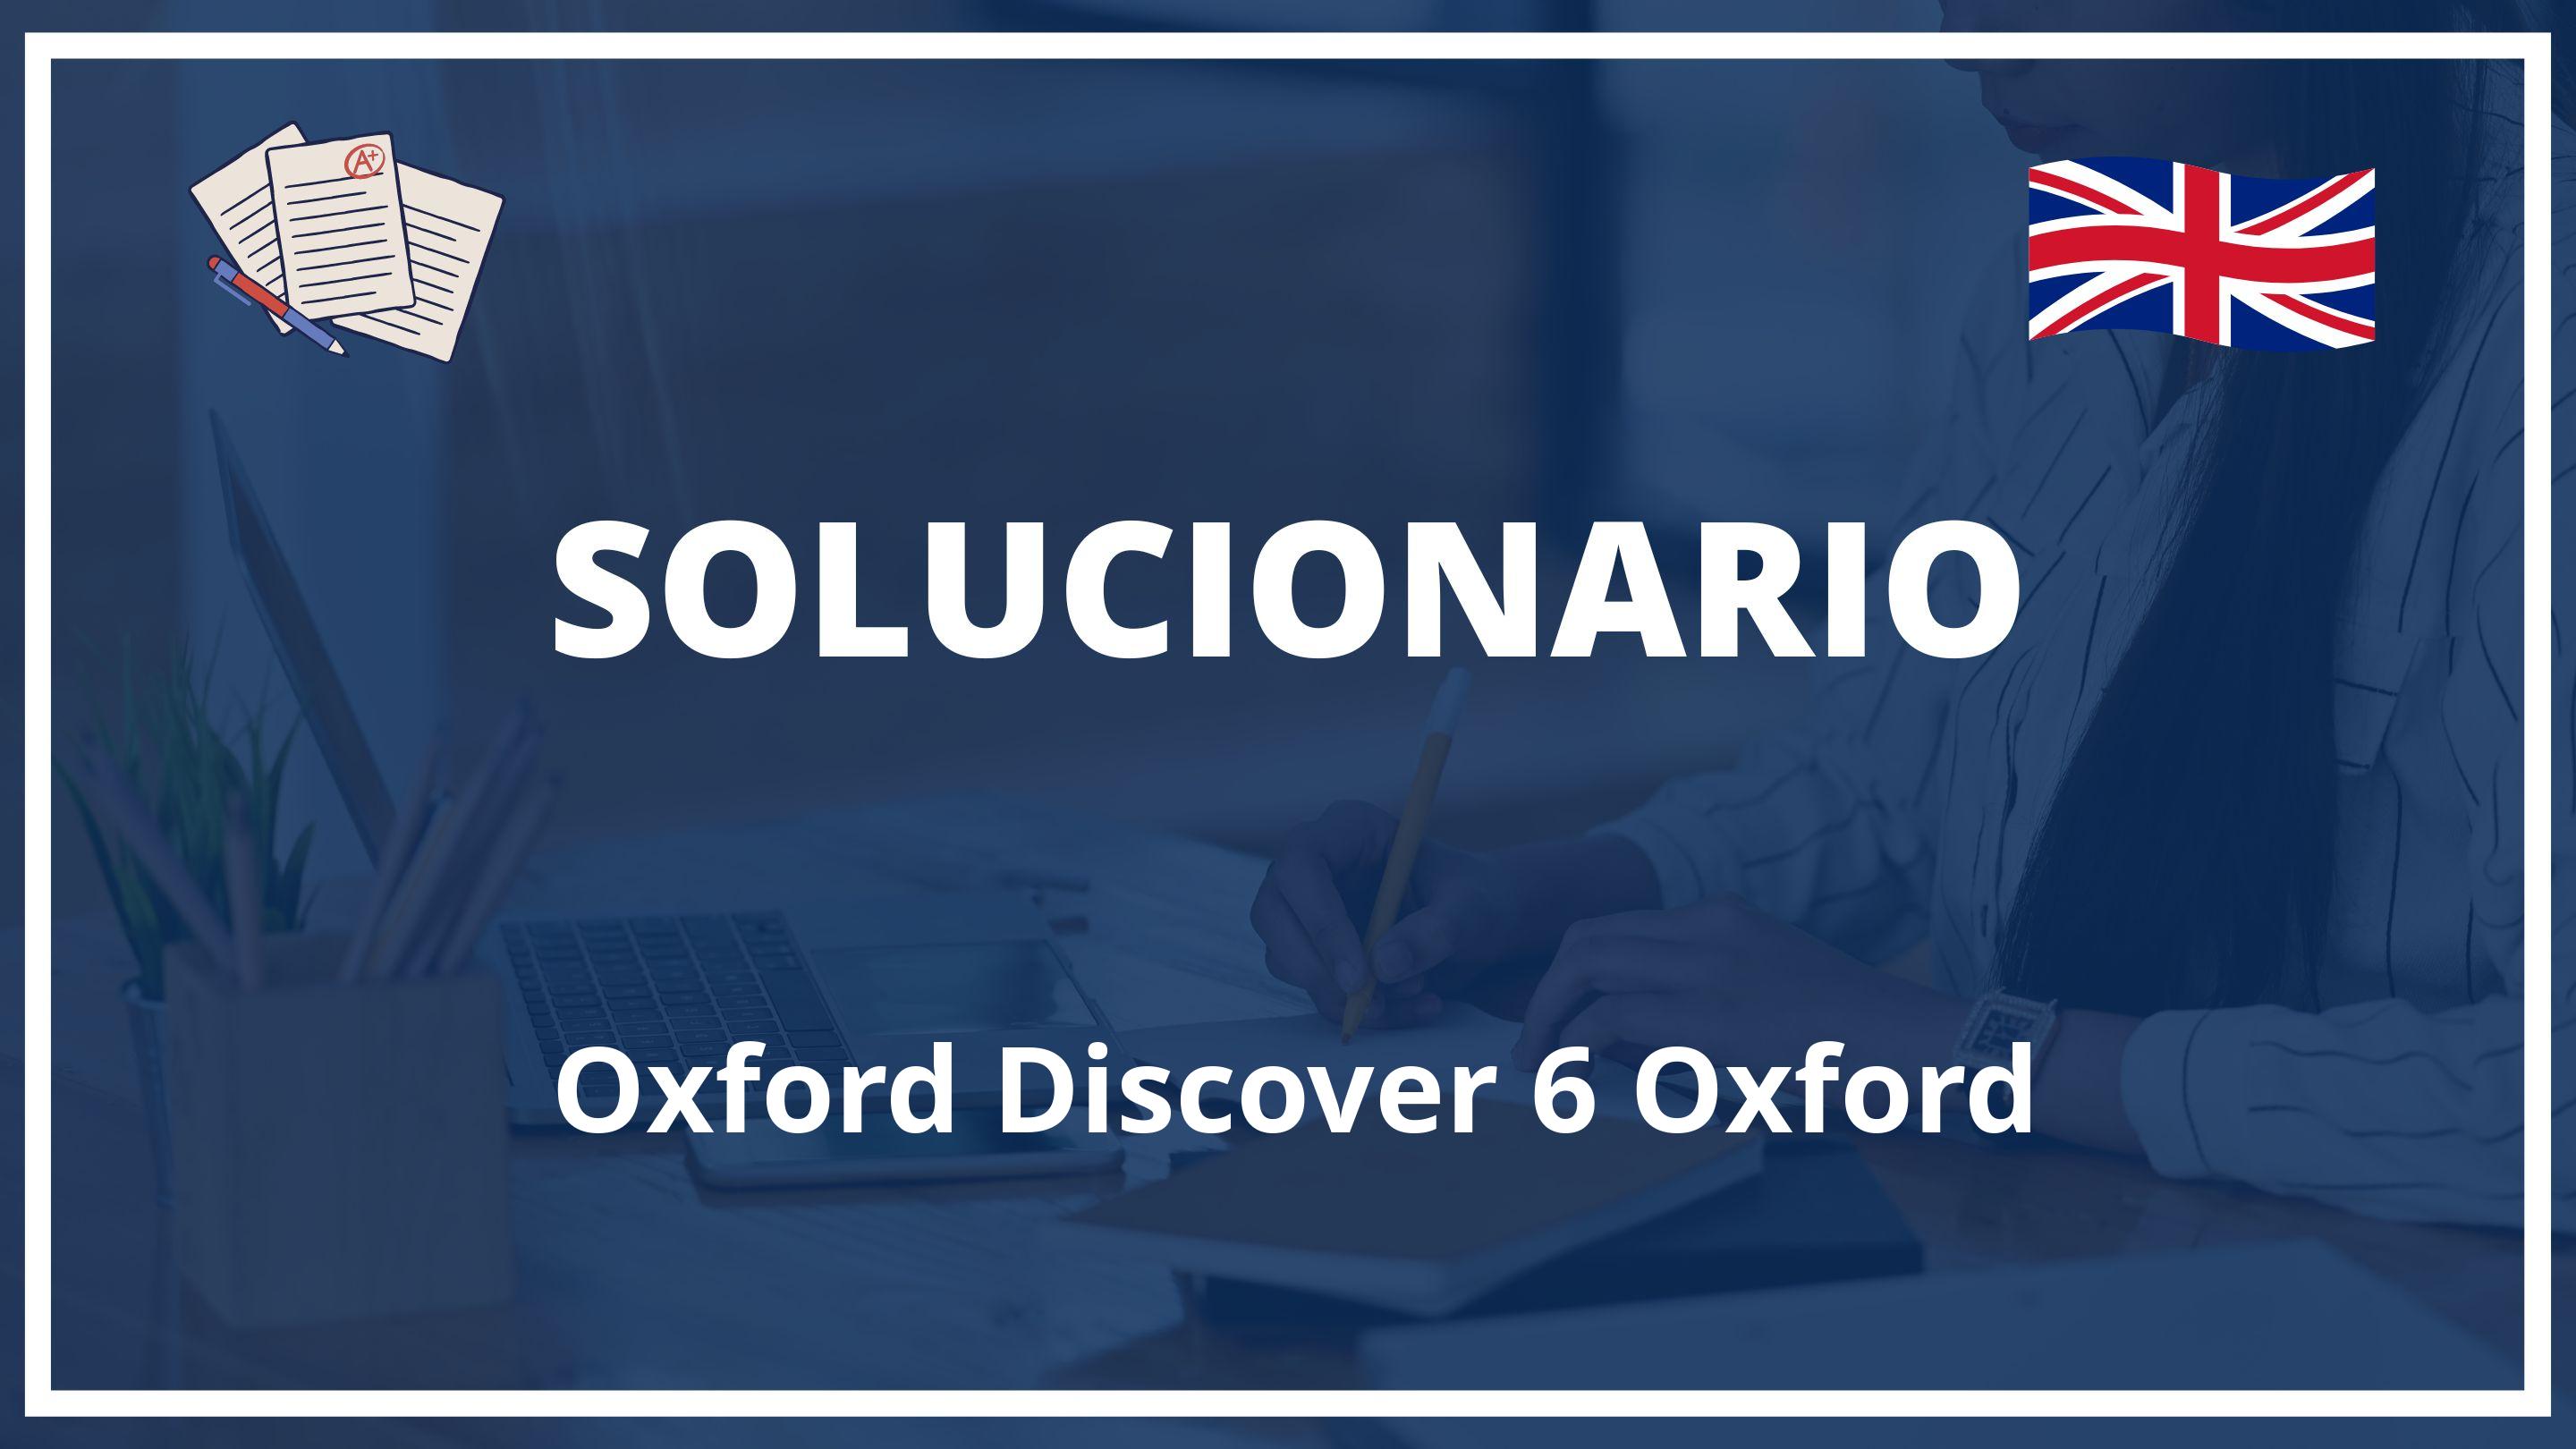 Oxford Discover 6 Oxford